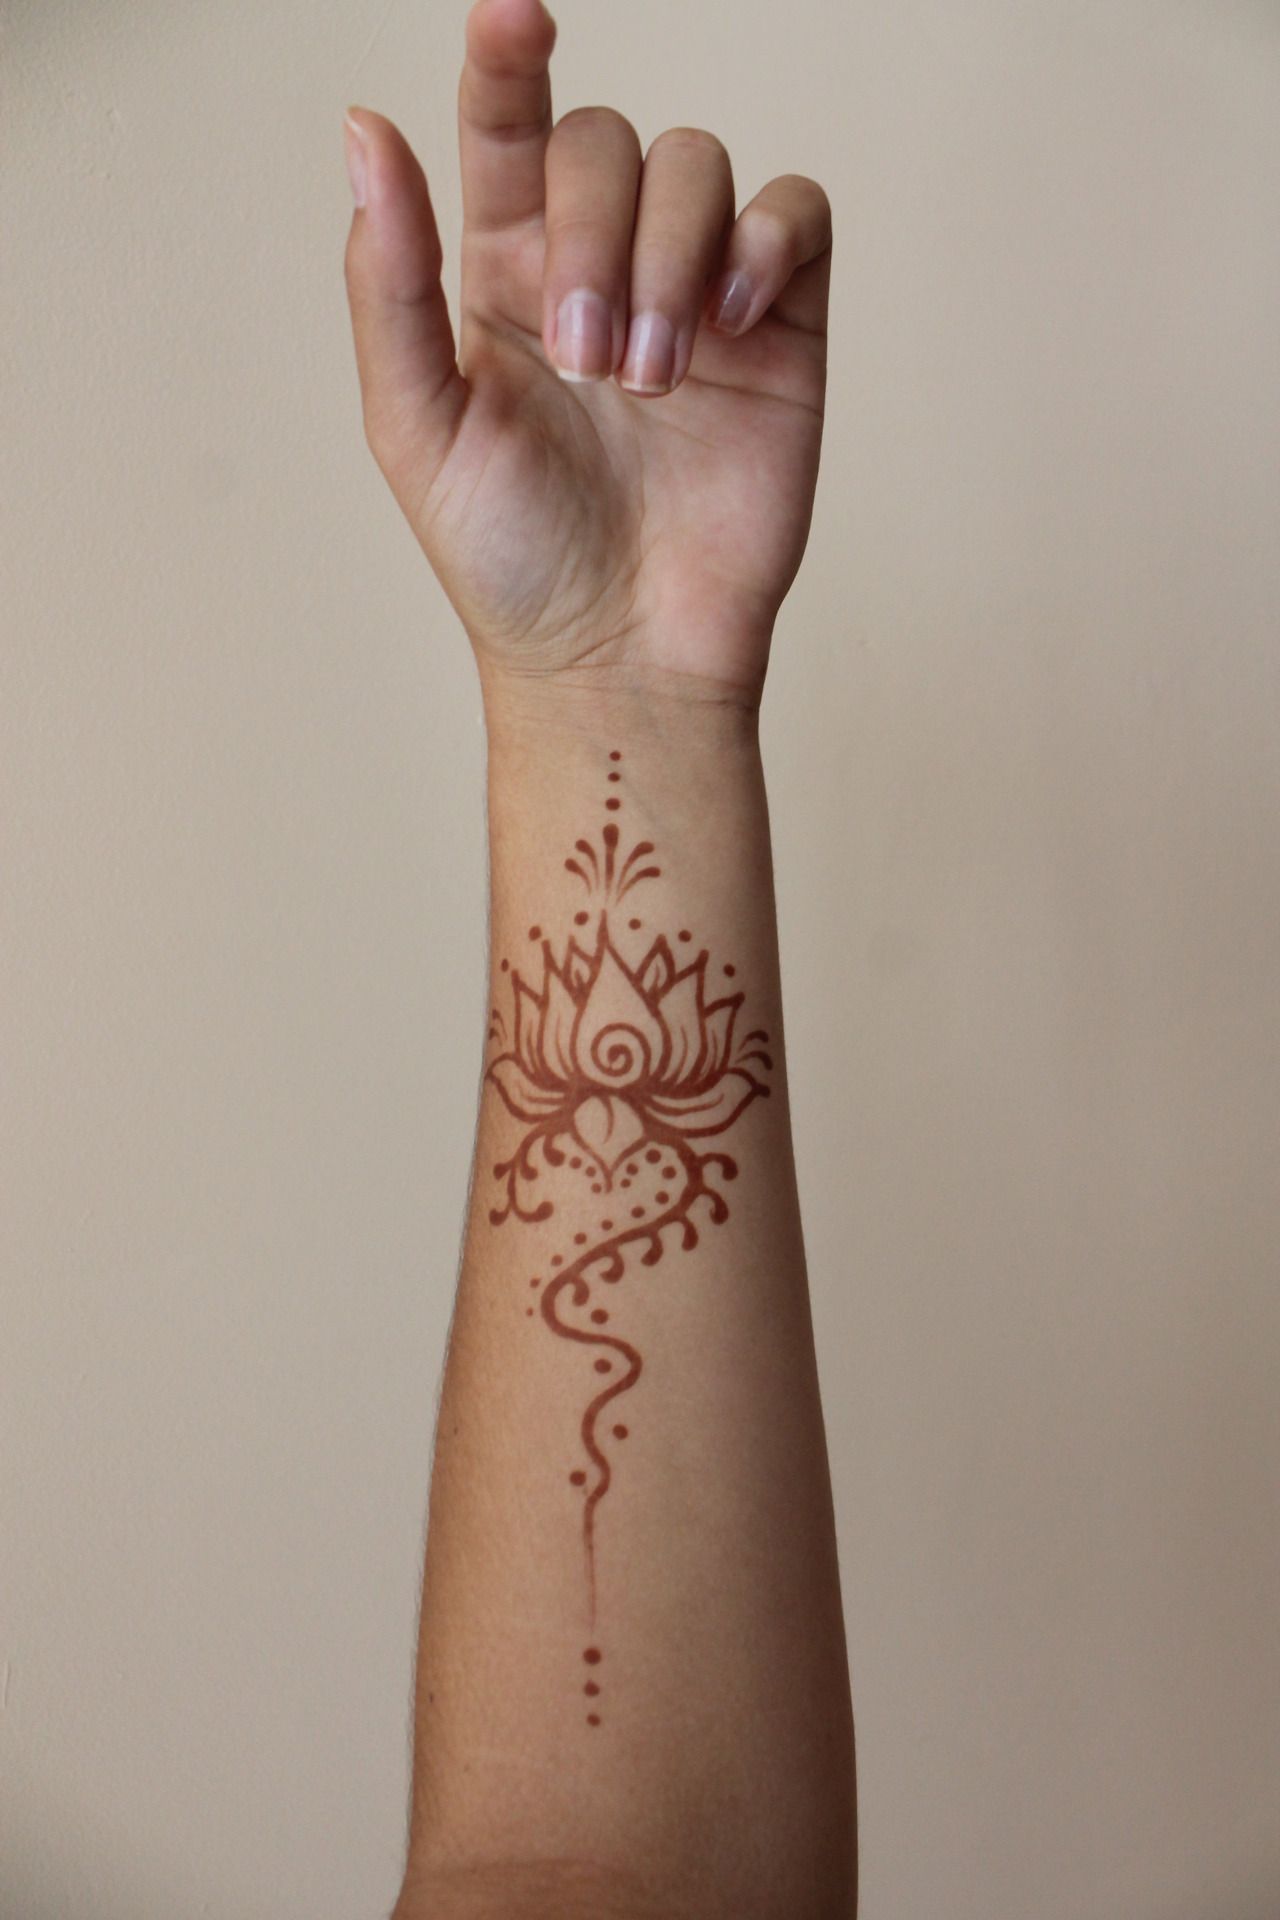 more henna